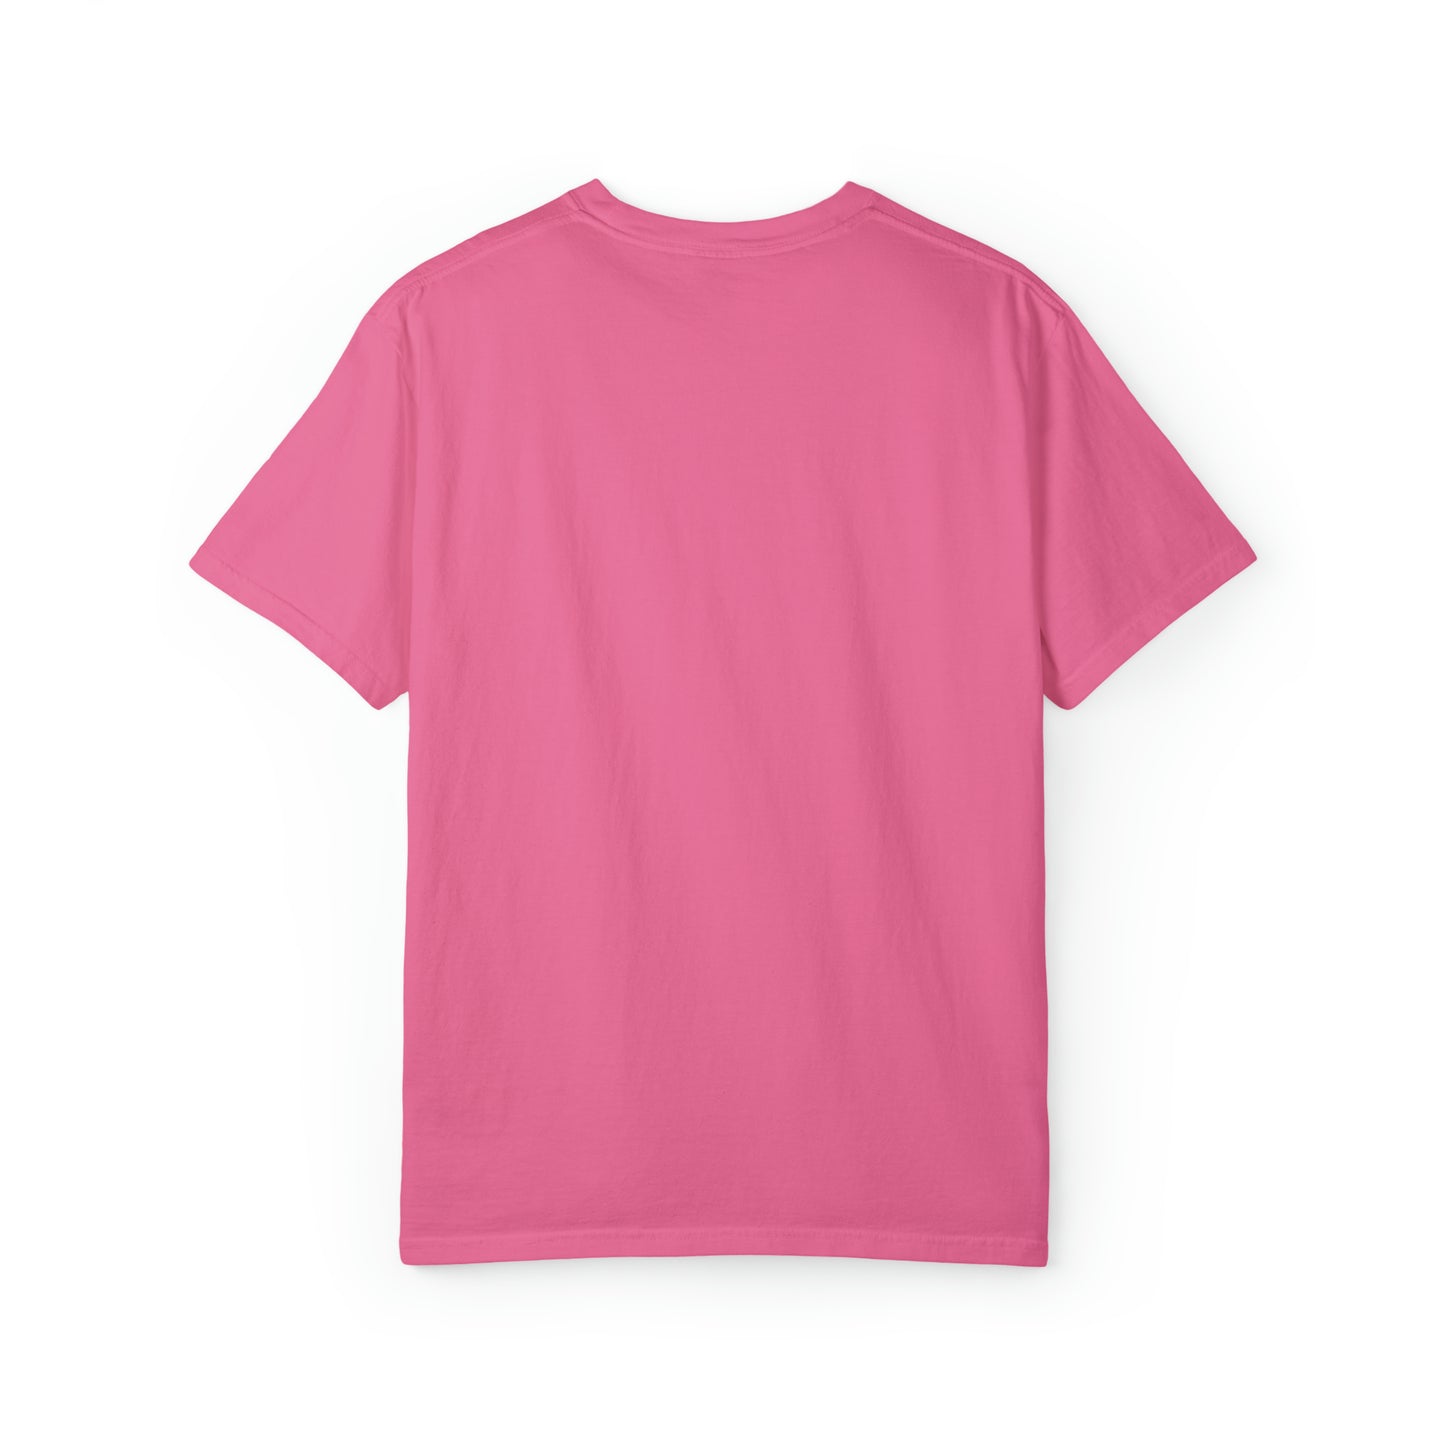 Retro Pink Santa | Garment-Dyed Graphic T-shirt